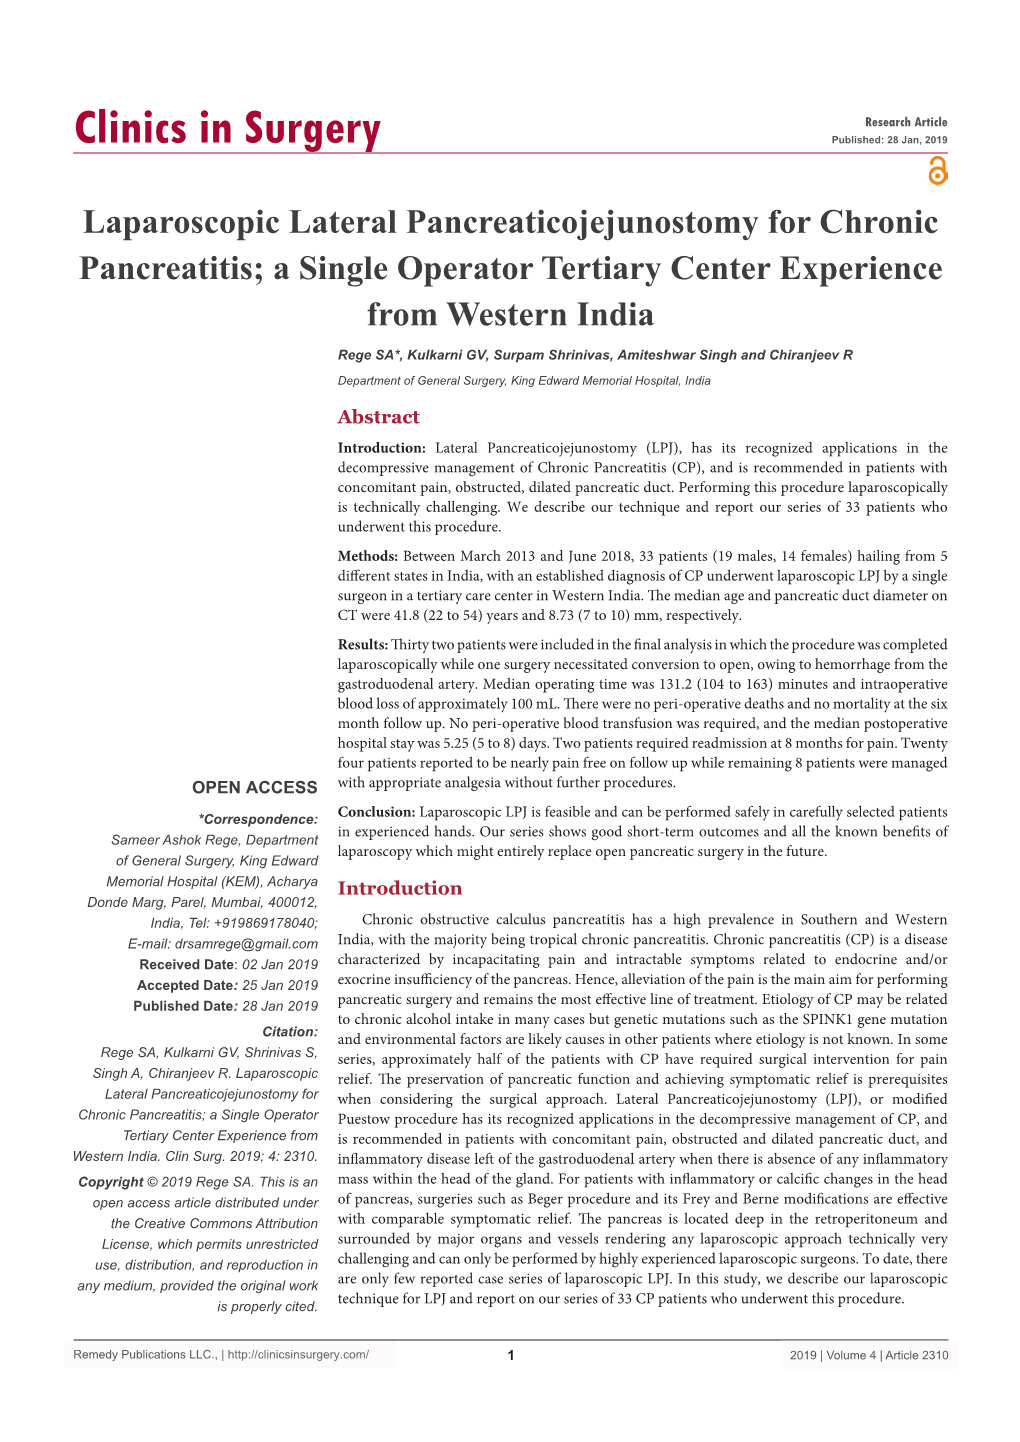 Laparoscopic Lateral Pancreaticojejunostomy for Chronic Pancreatitis; a Single Operator Tertiary Center Experience from Western India